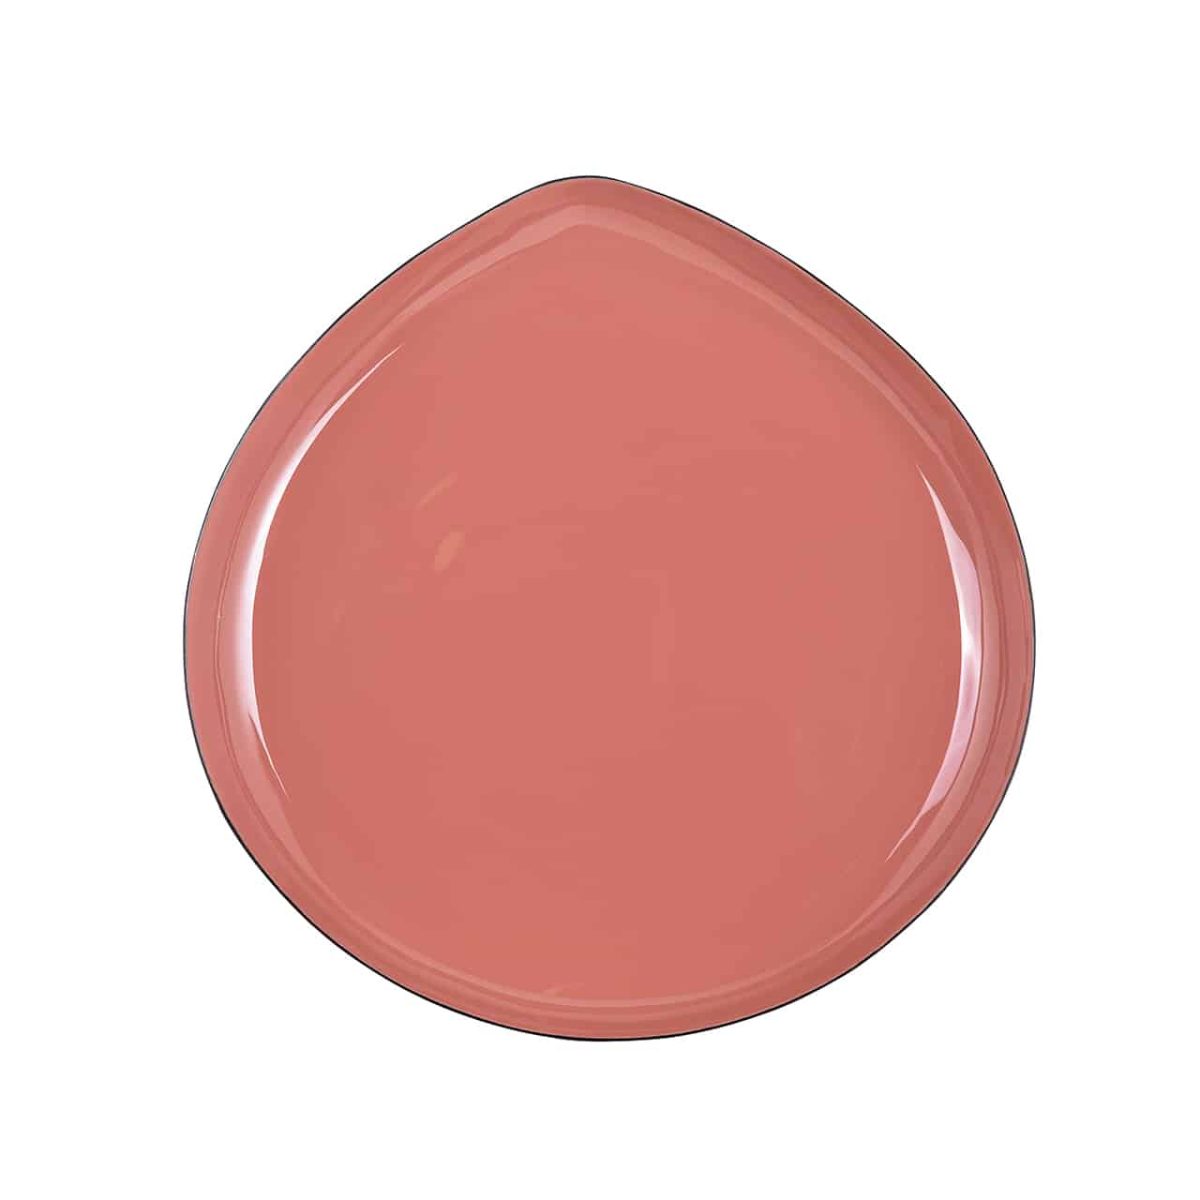 825100 - Bijzettafel Trinity roze/grijs set van 3 (Pink)